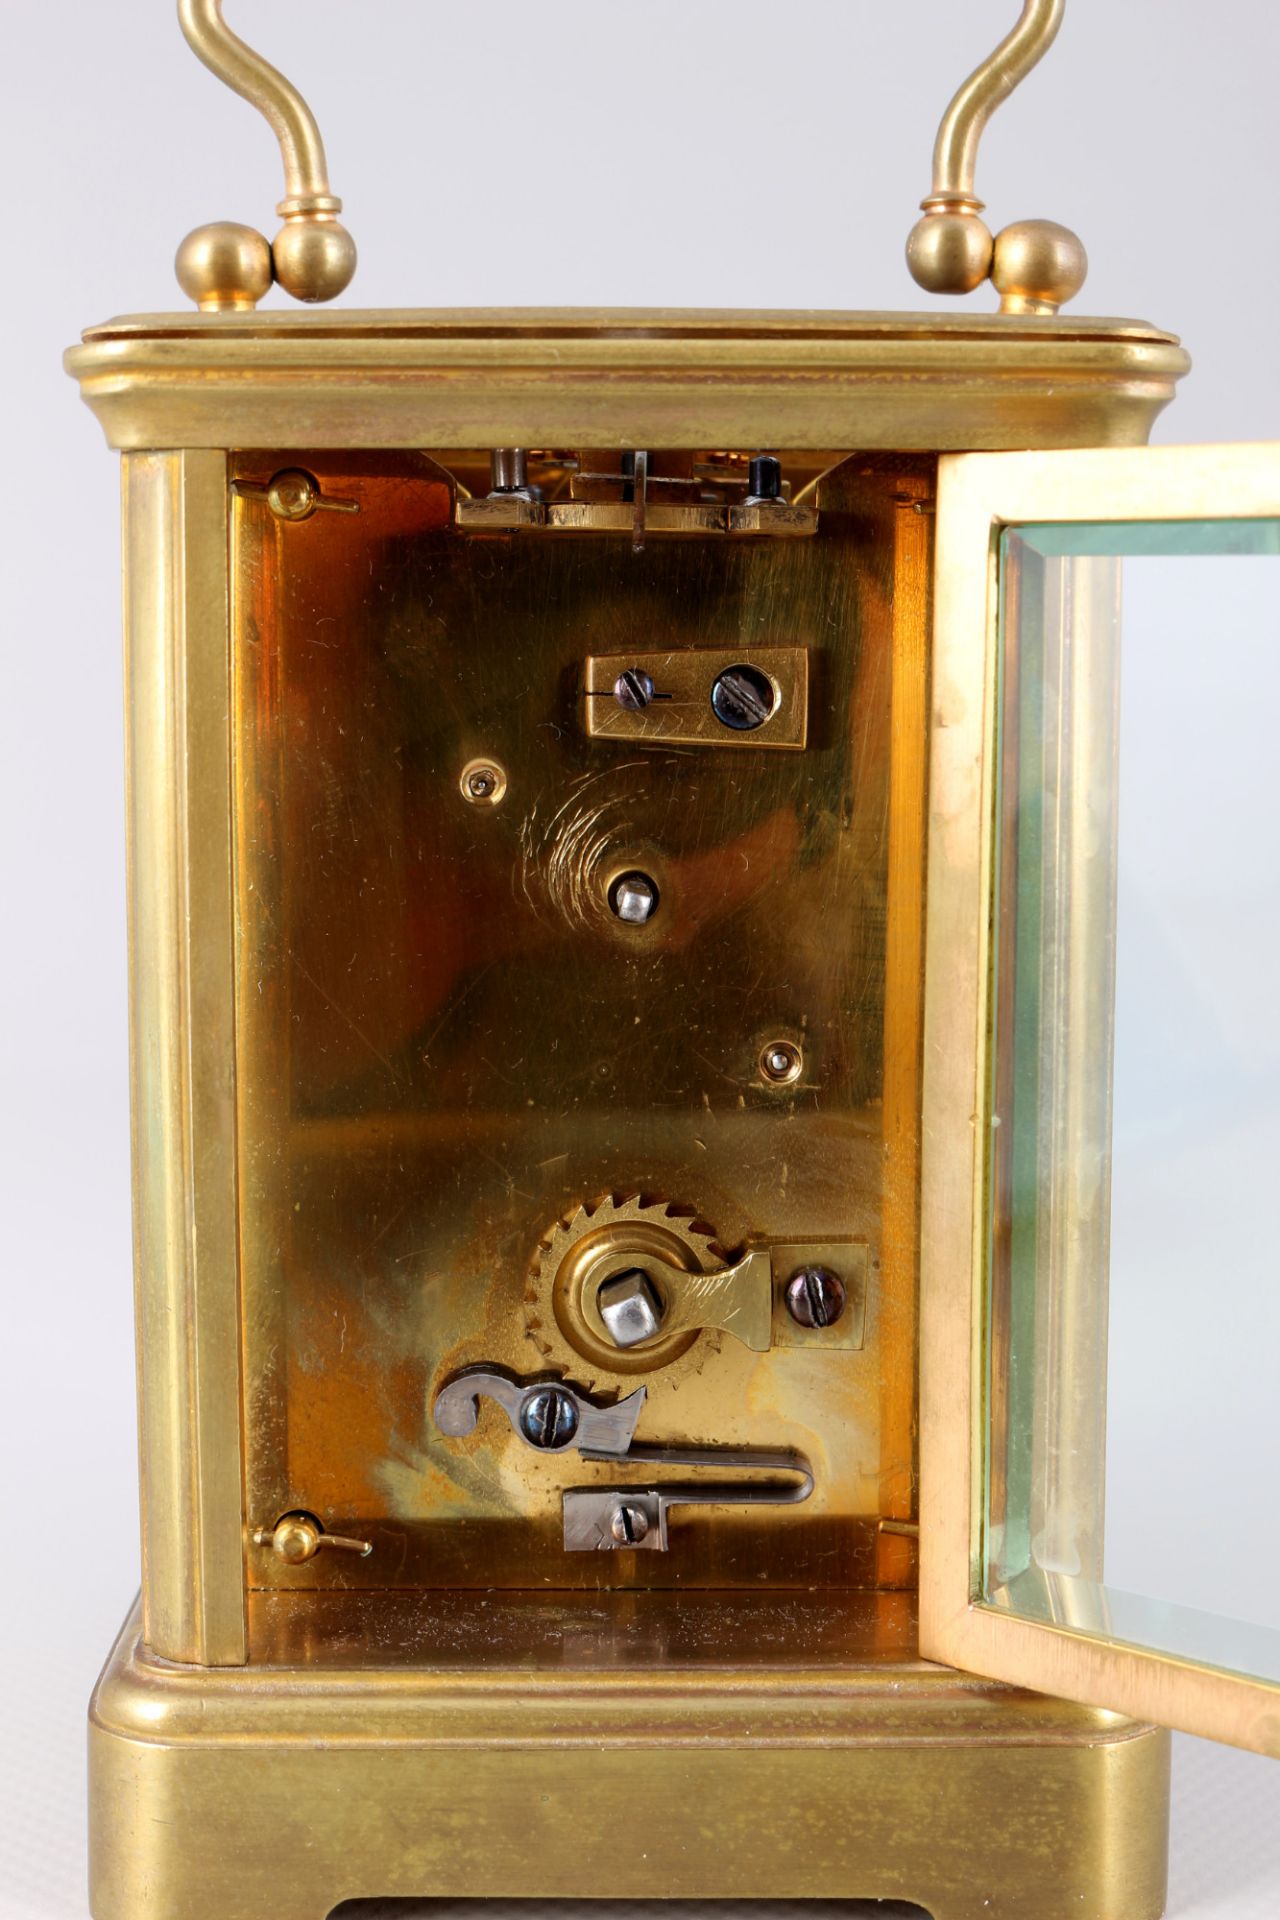 Carriage clock, England around 1900, Reiseuhr, - Image 5 of 7